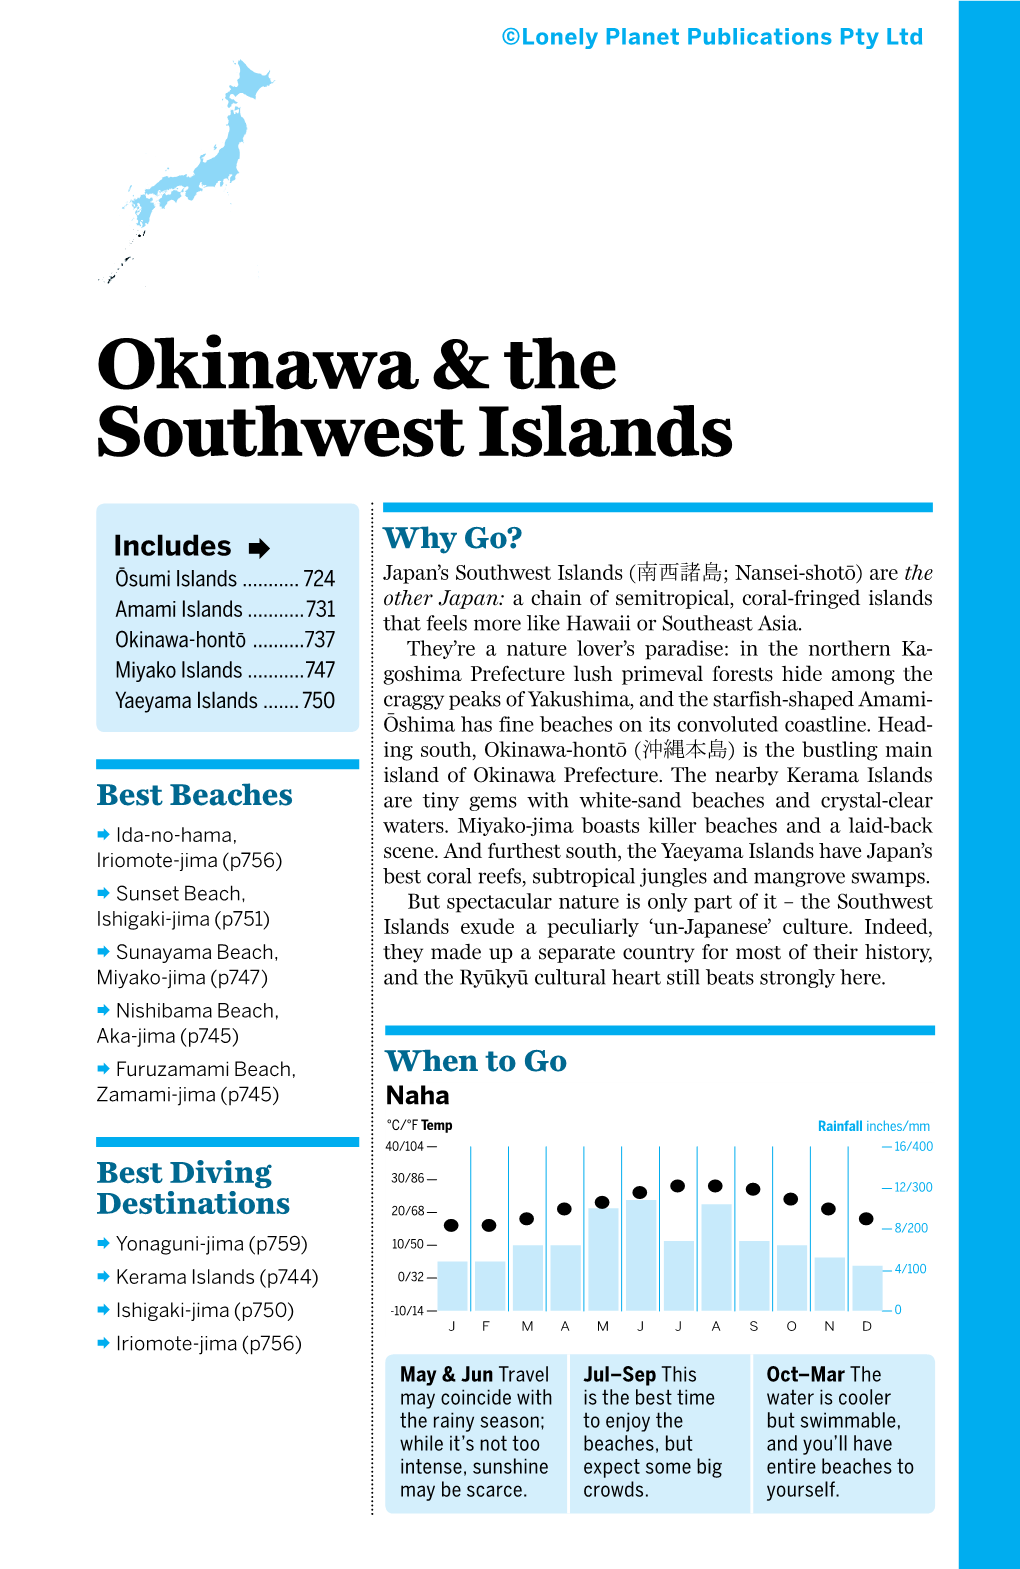 Okinawa & the Southwest Islands